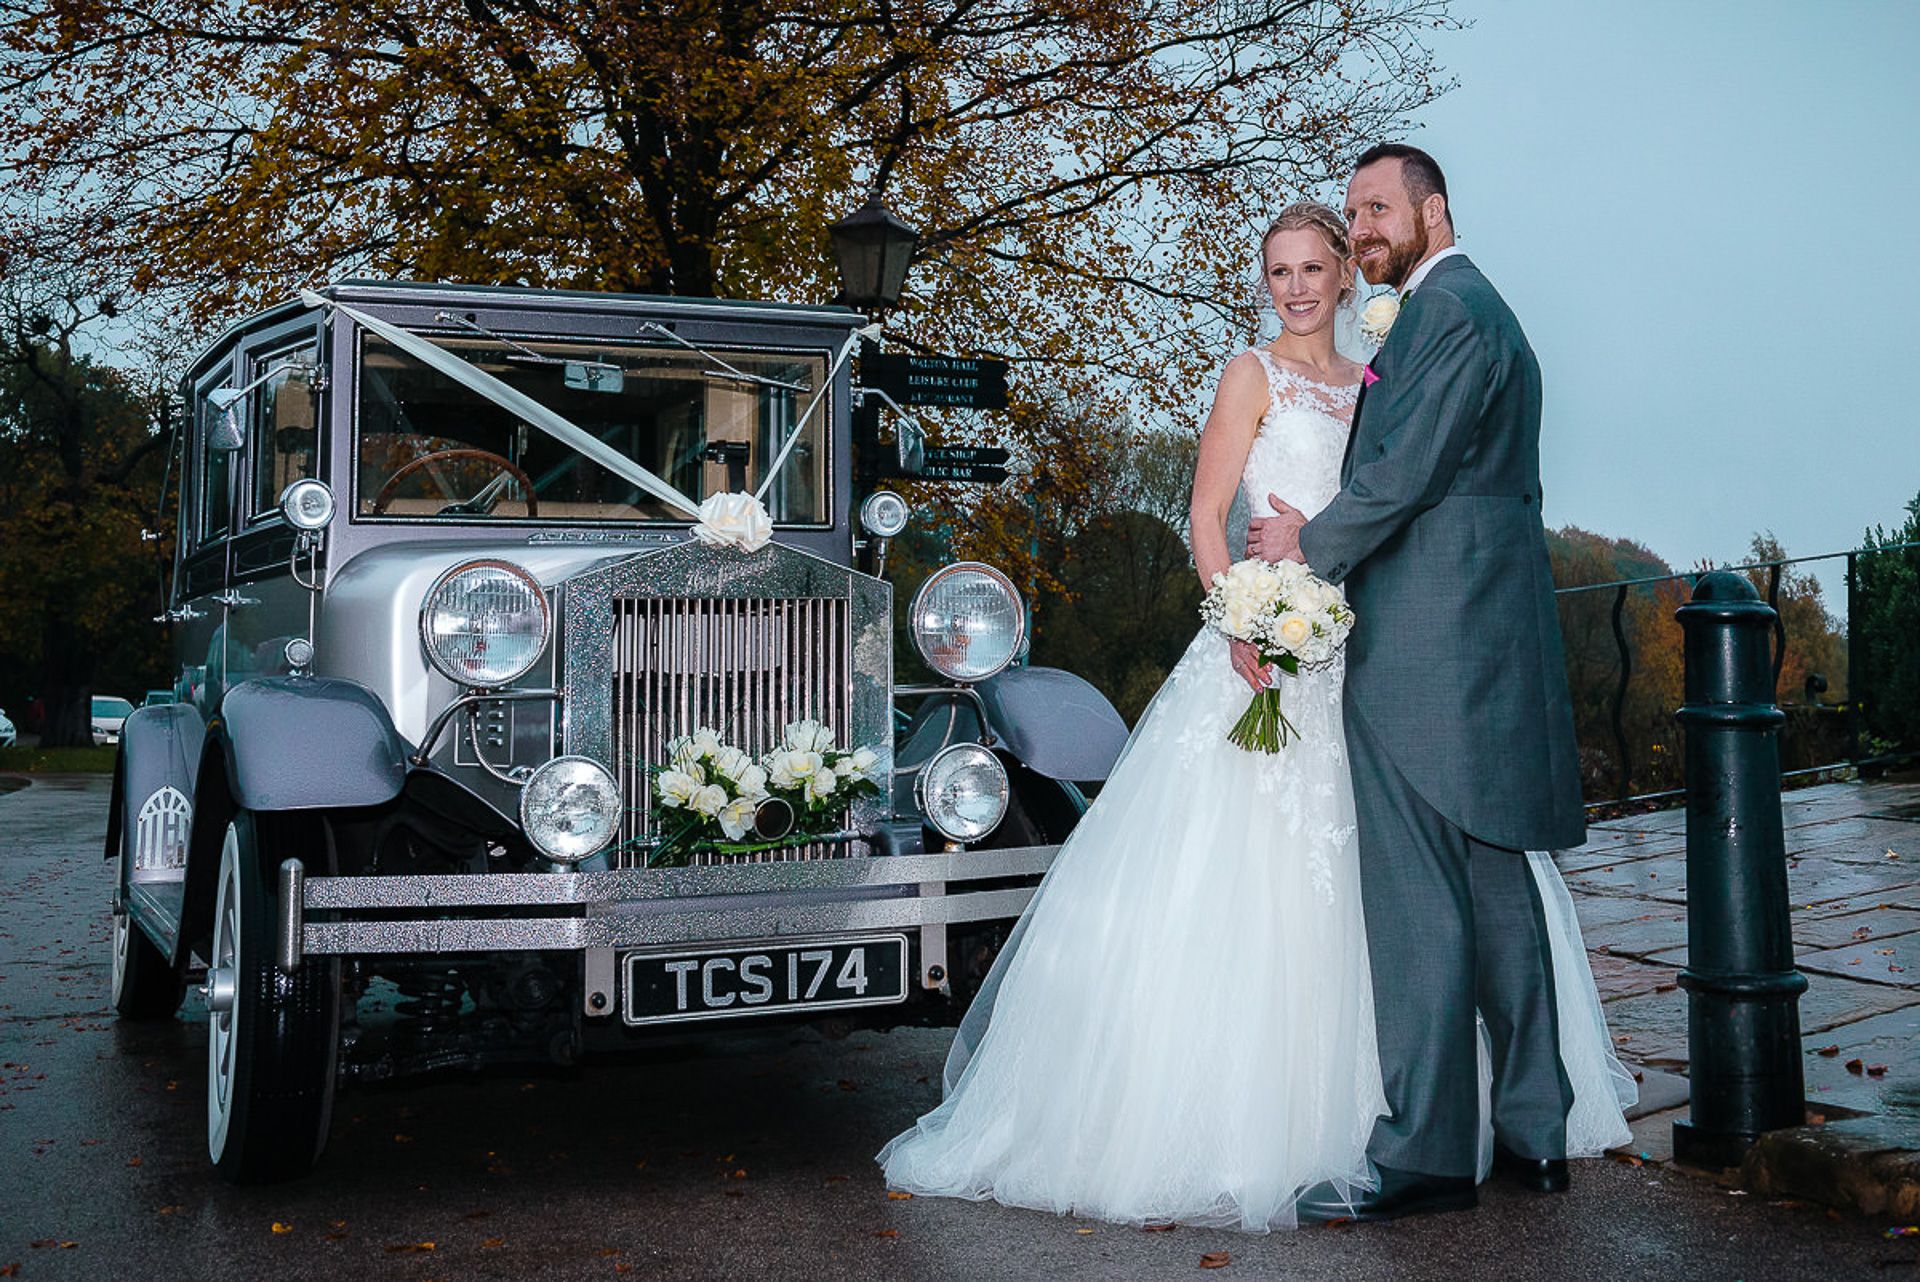 bride and groom pose beside the vintage wedding car